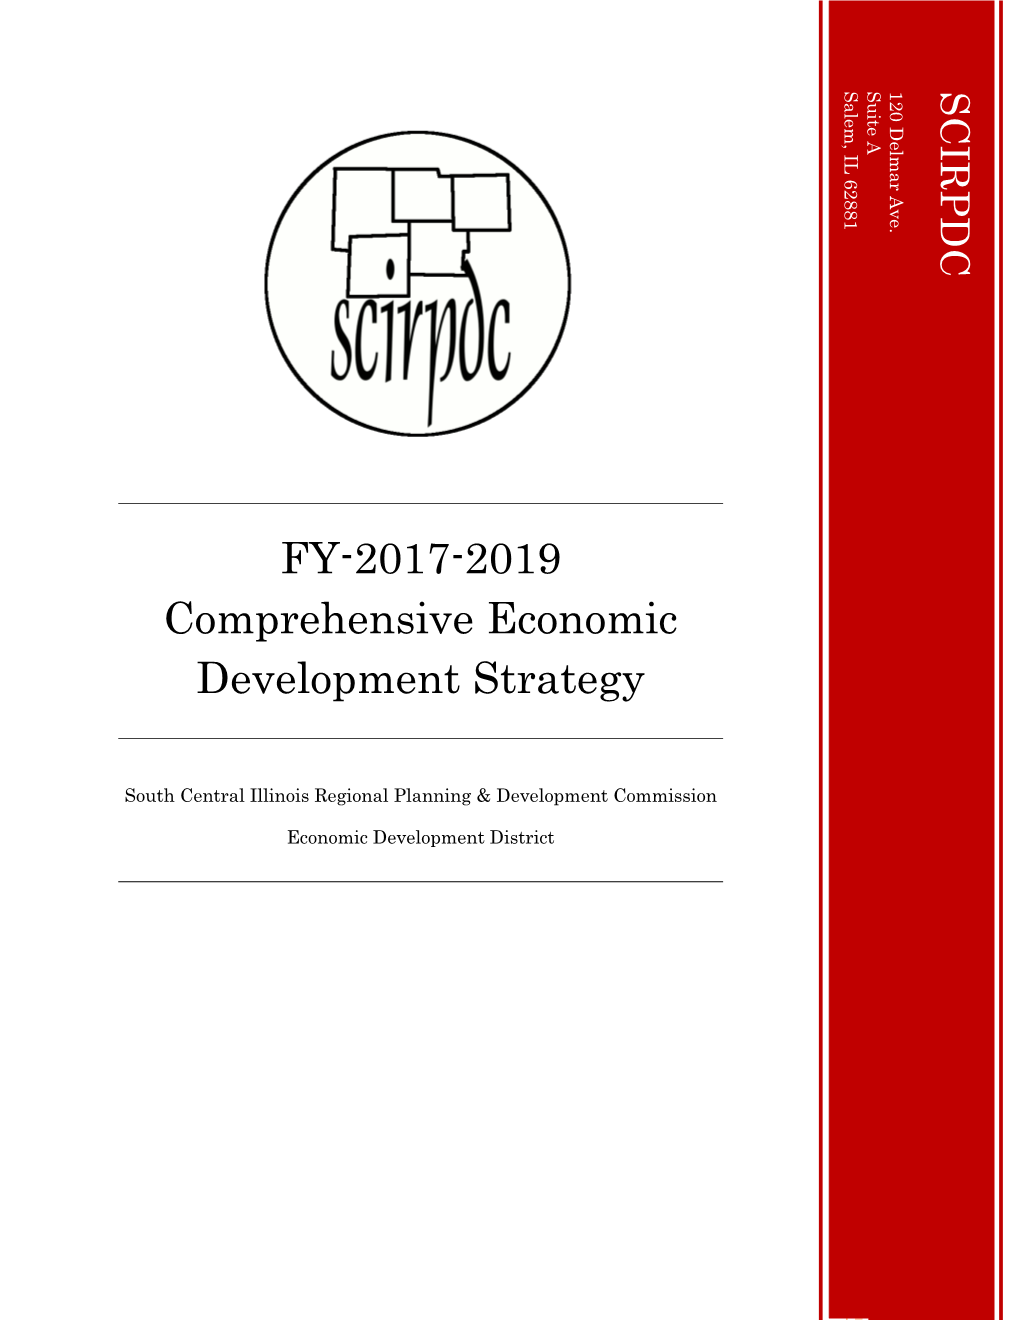 FY-2017-2019 Comprehensive Economic Development Strategy